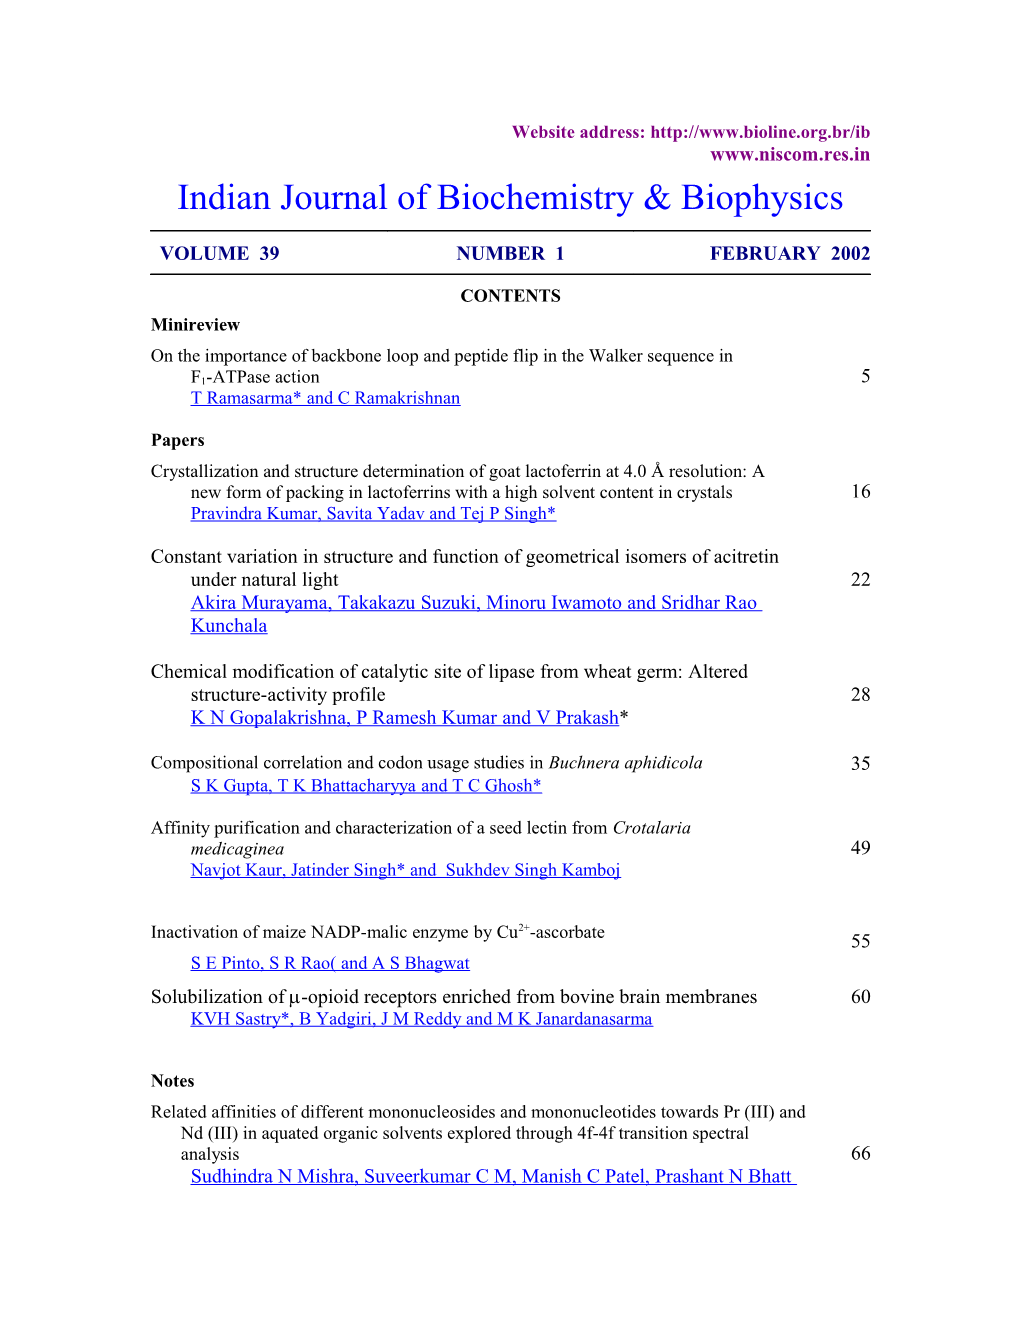 Indian Journal of Biochemistry & Biophysics